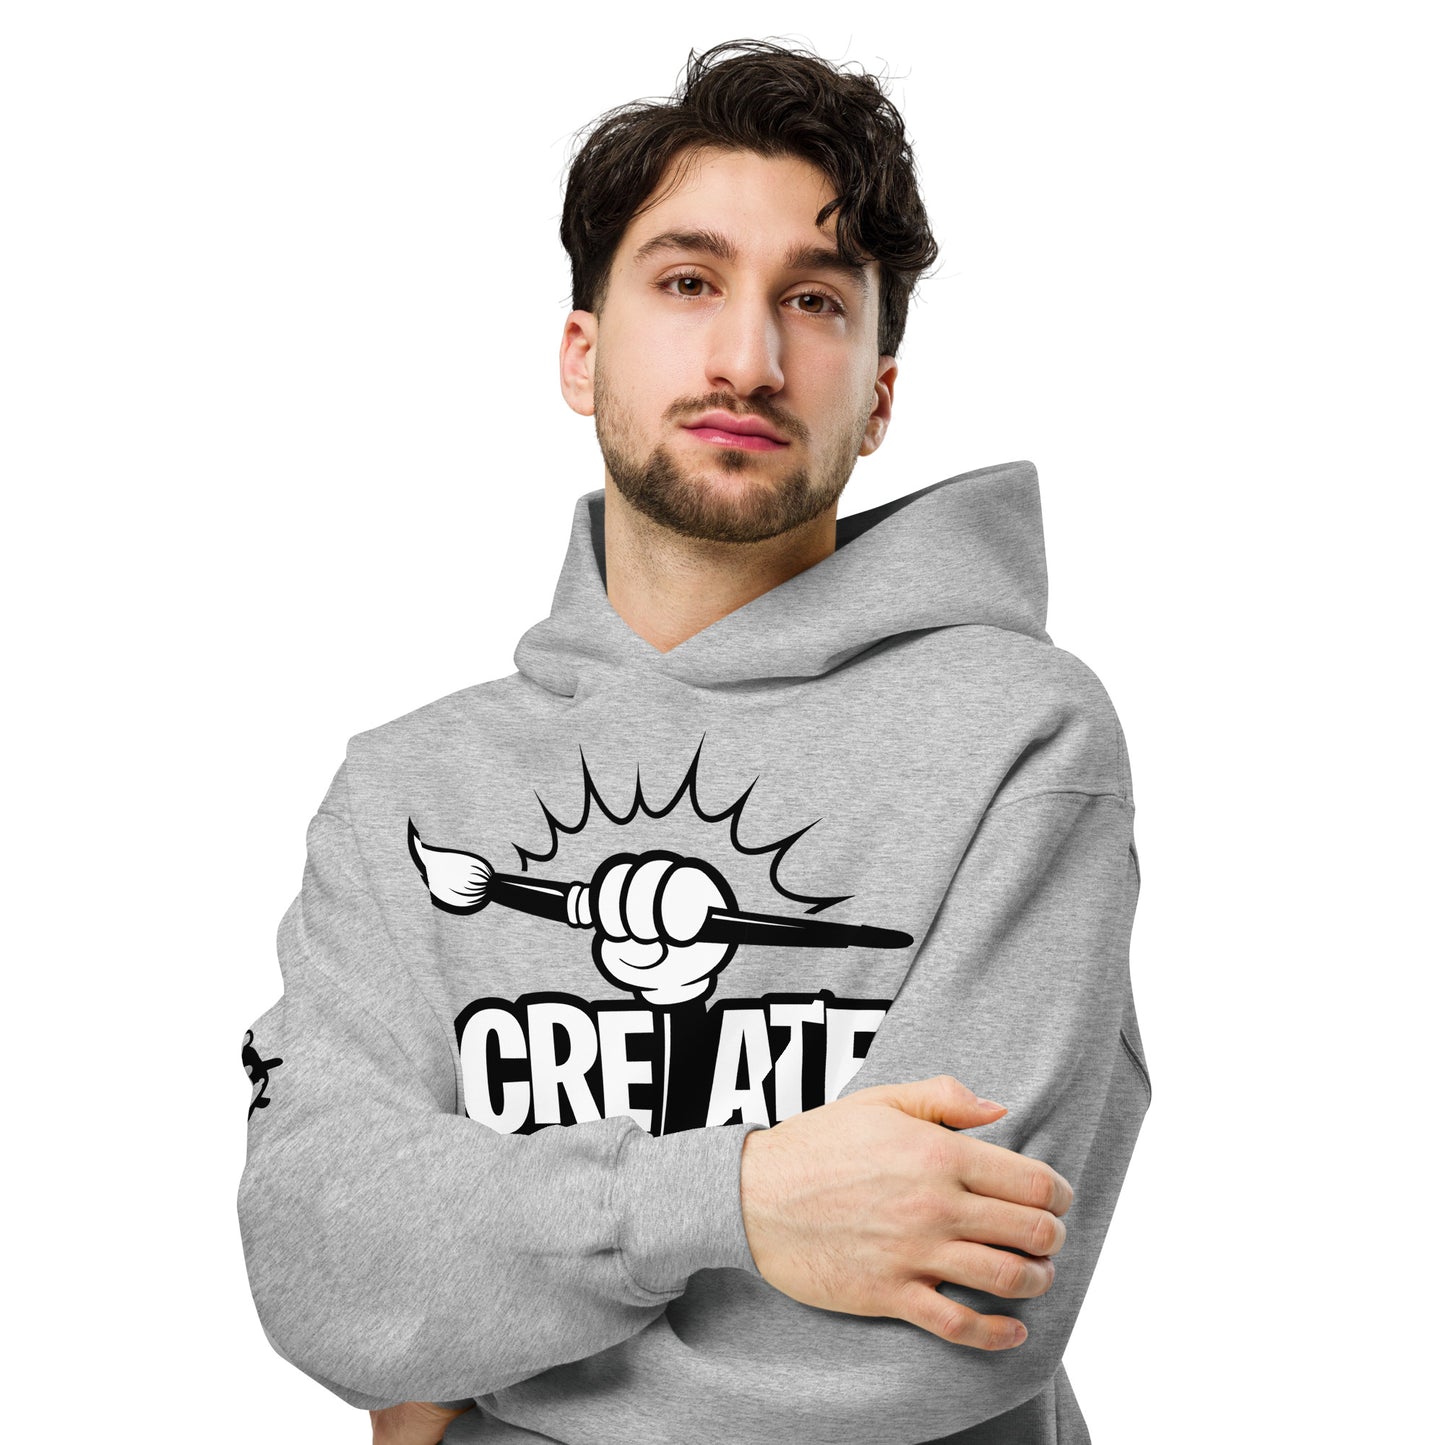 Create! Oversized Pullover Hoodie